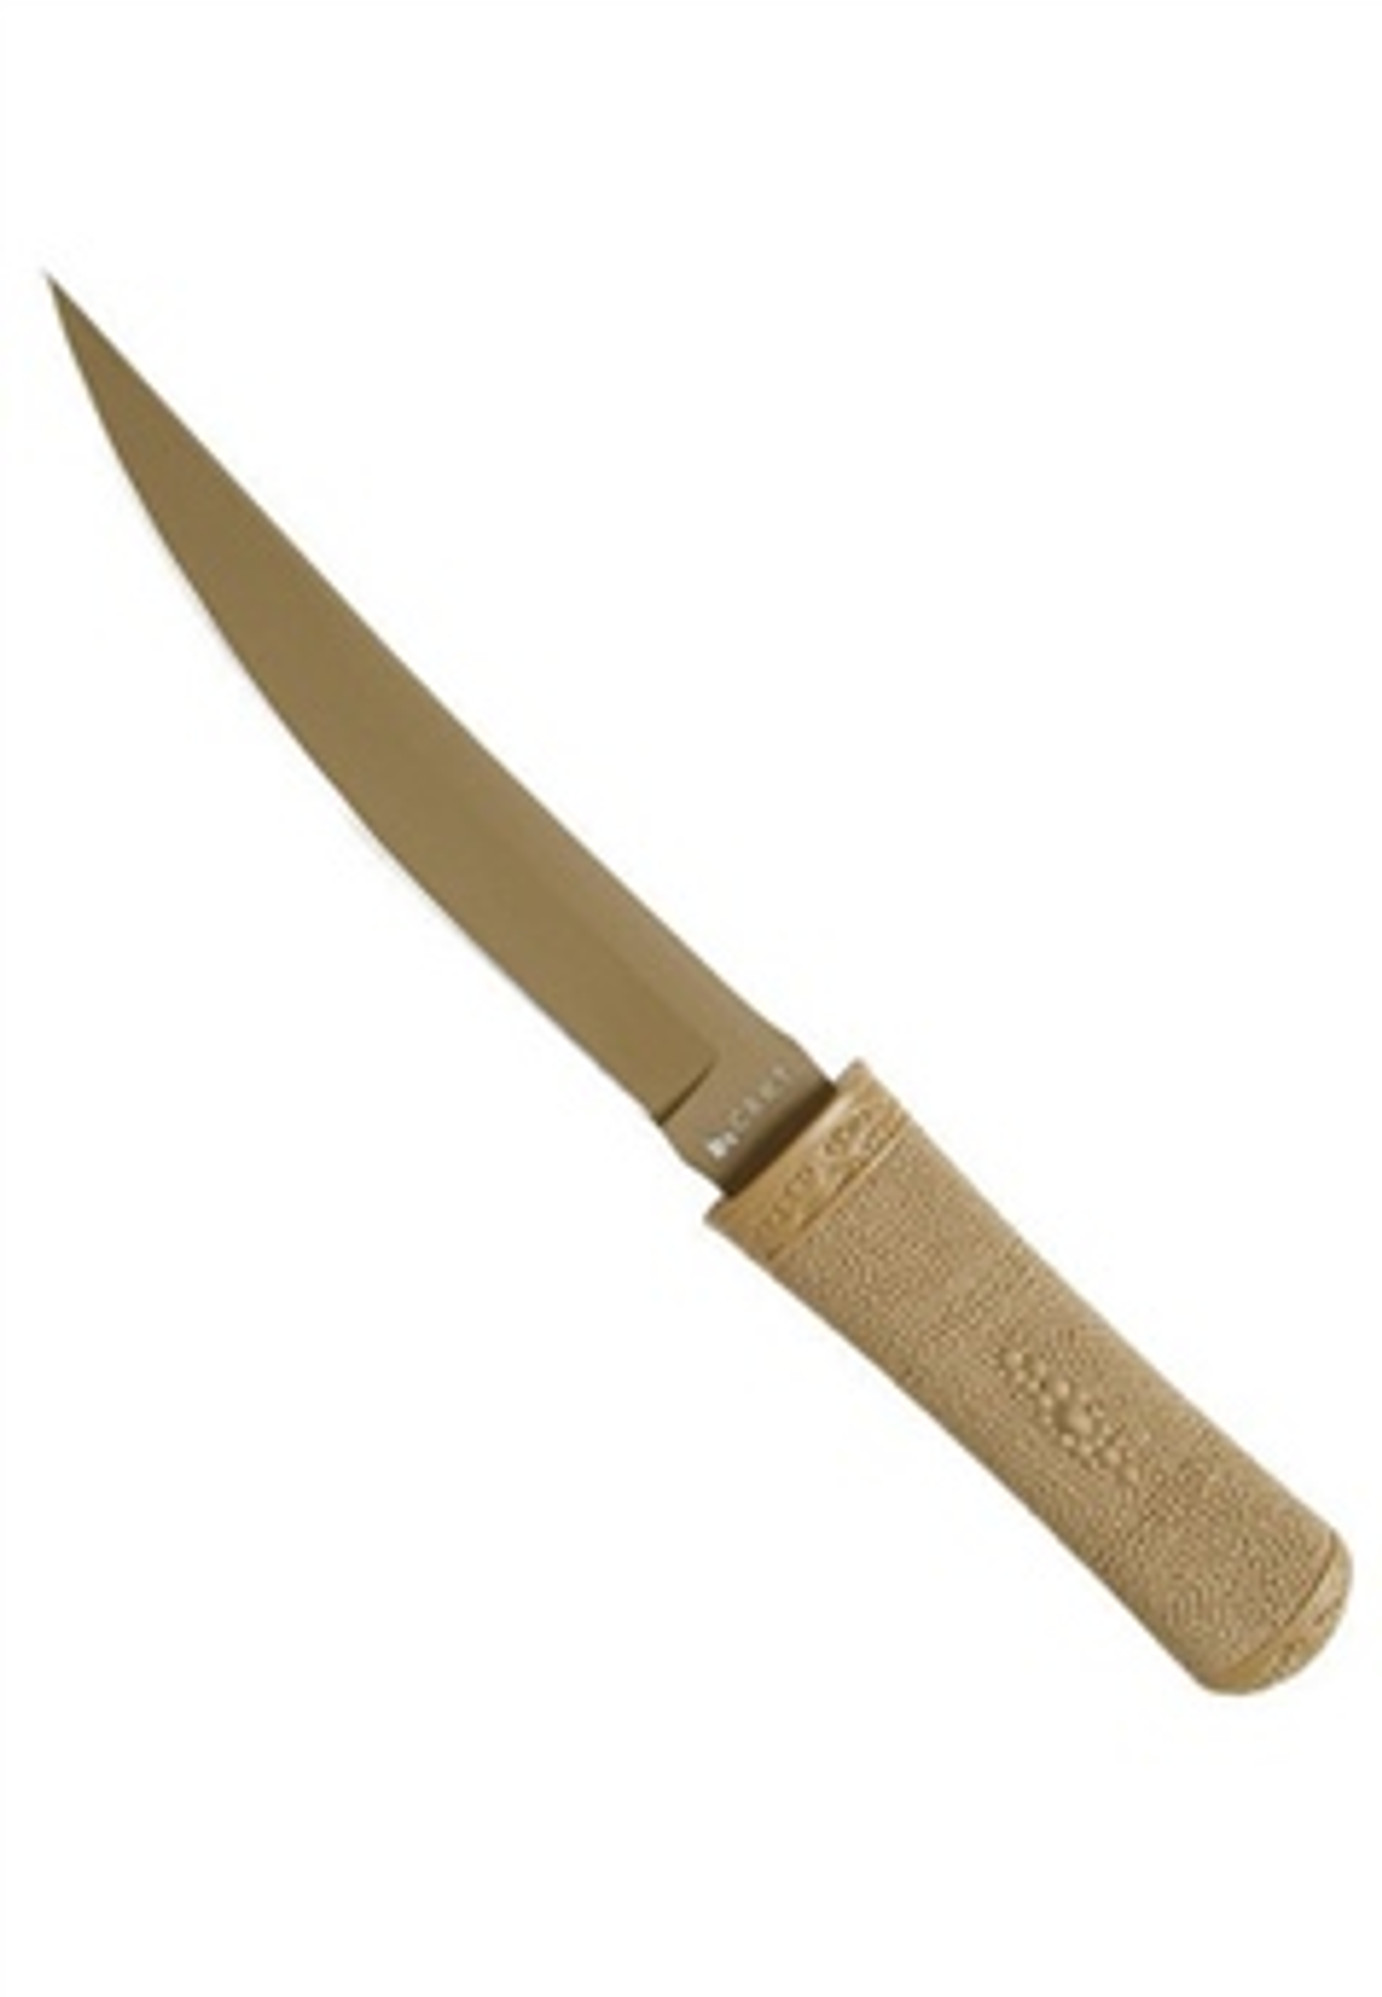 CRKT Hissatsu Fixed Blade Knife - Tan